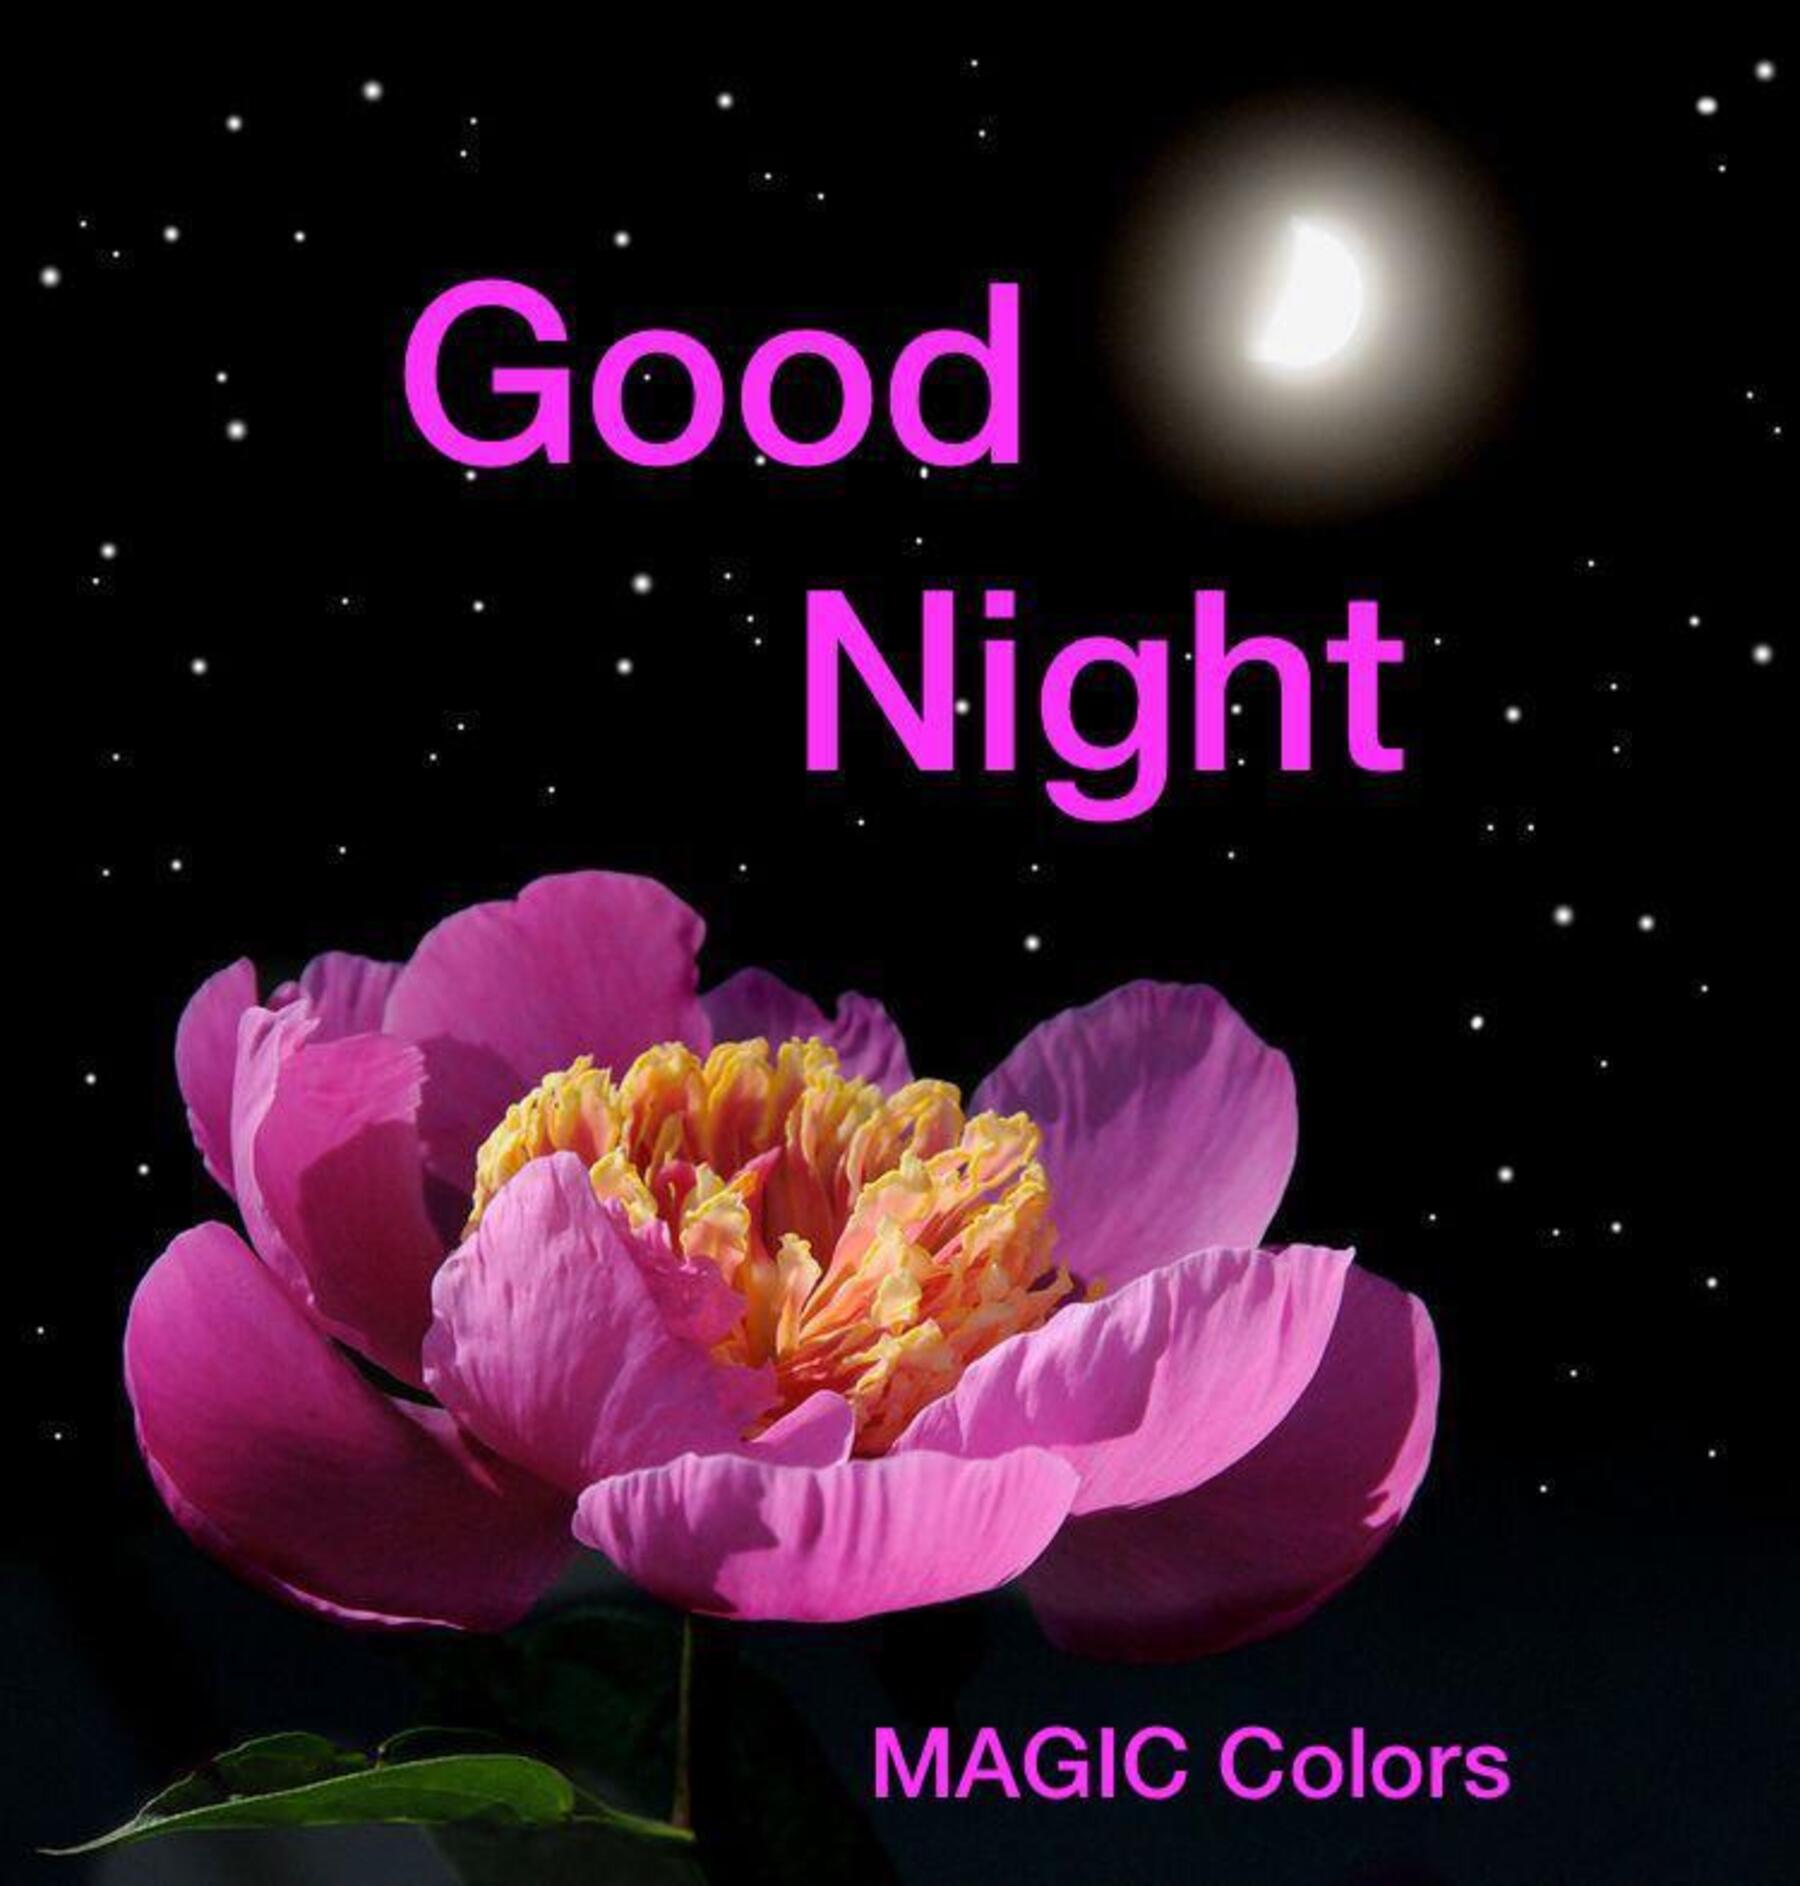 Good Night magic colors